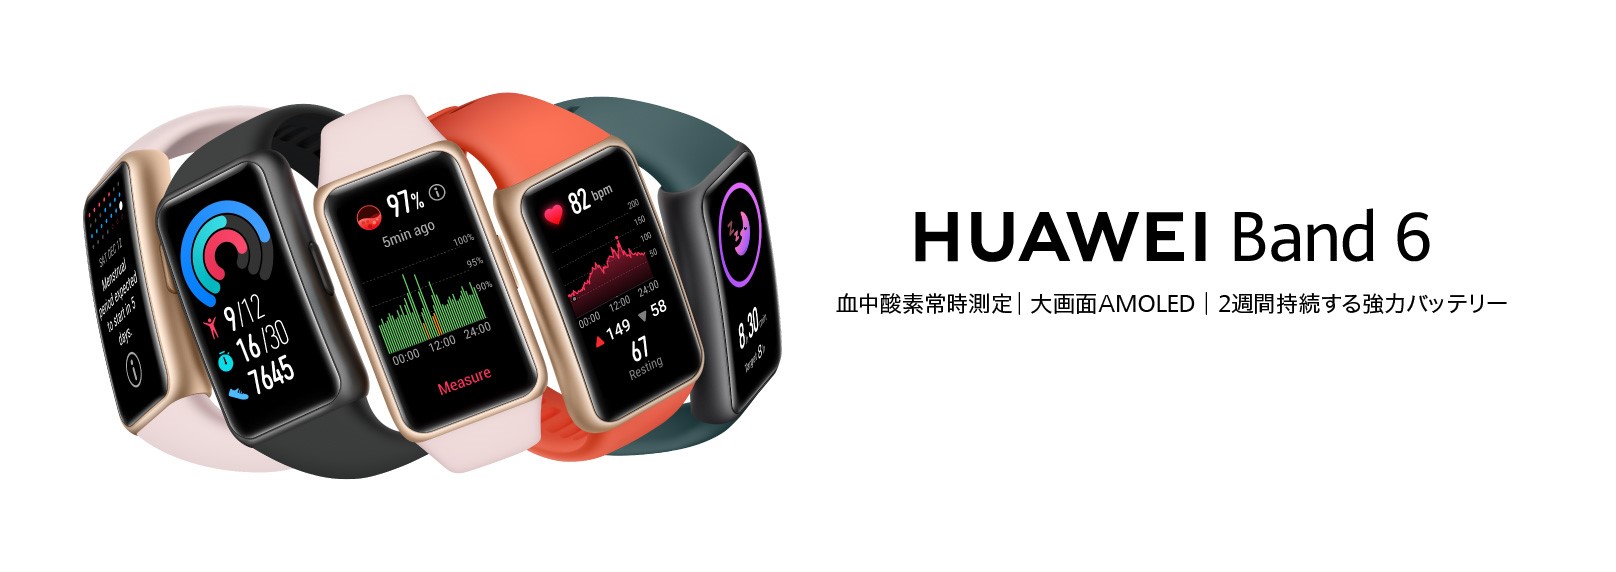 Huawei band 8 цены. Huawei Band 6 Pro. Смарт часы с монохромным дисплеем. Хуавей бэнд 8. Huawei Band 6 watchfaces.